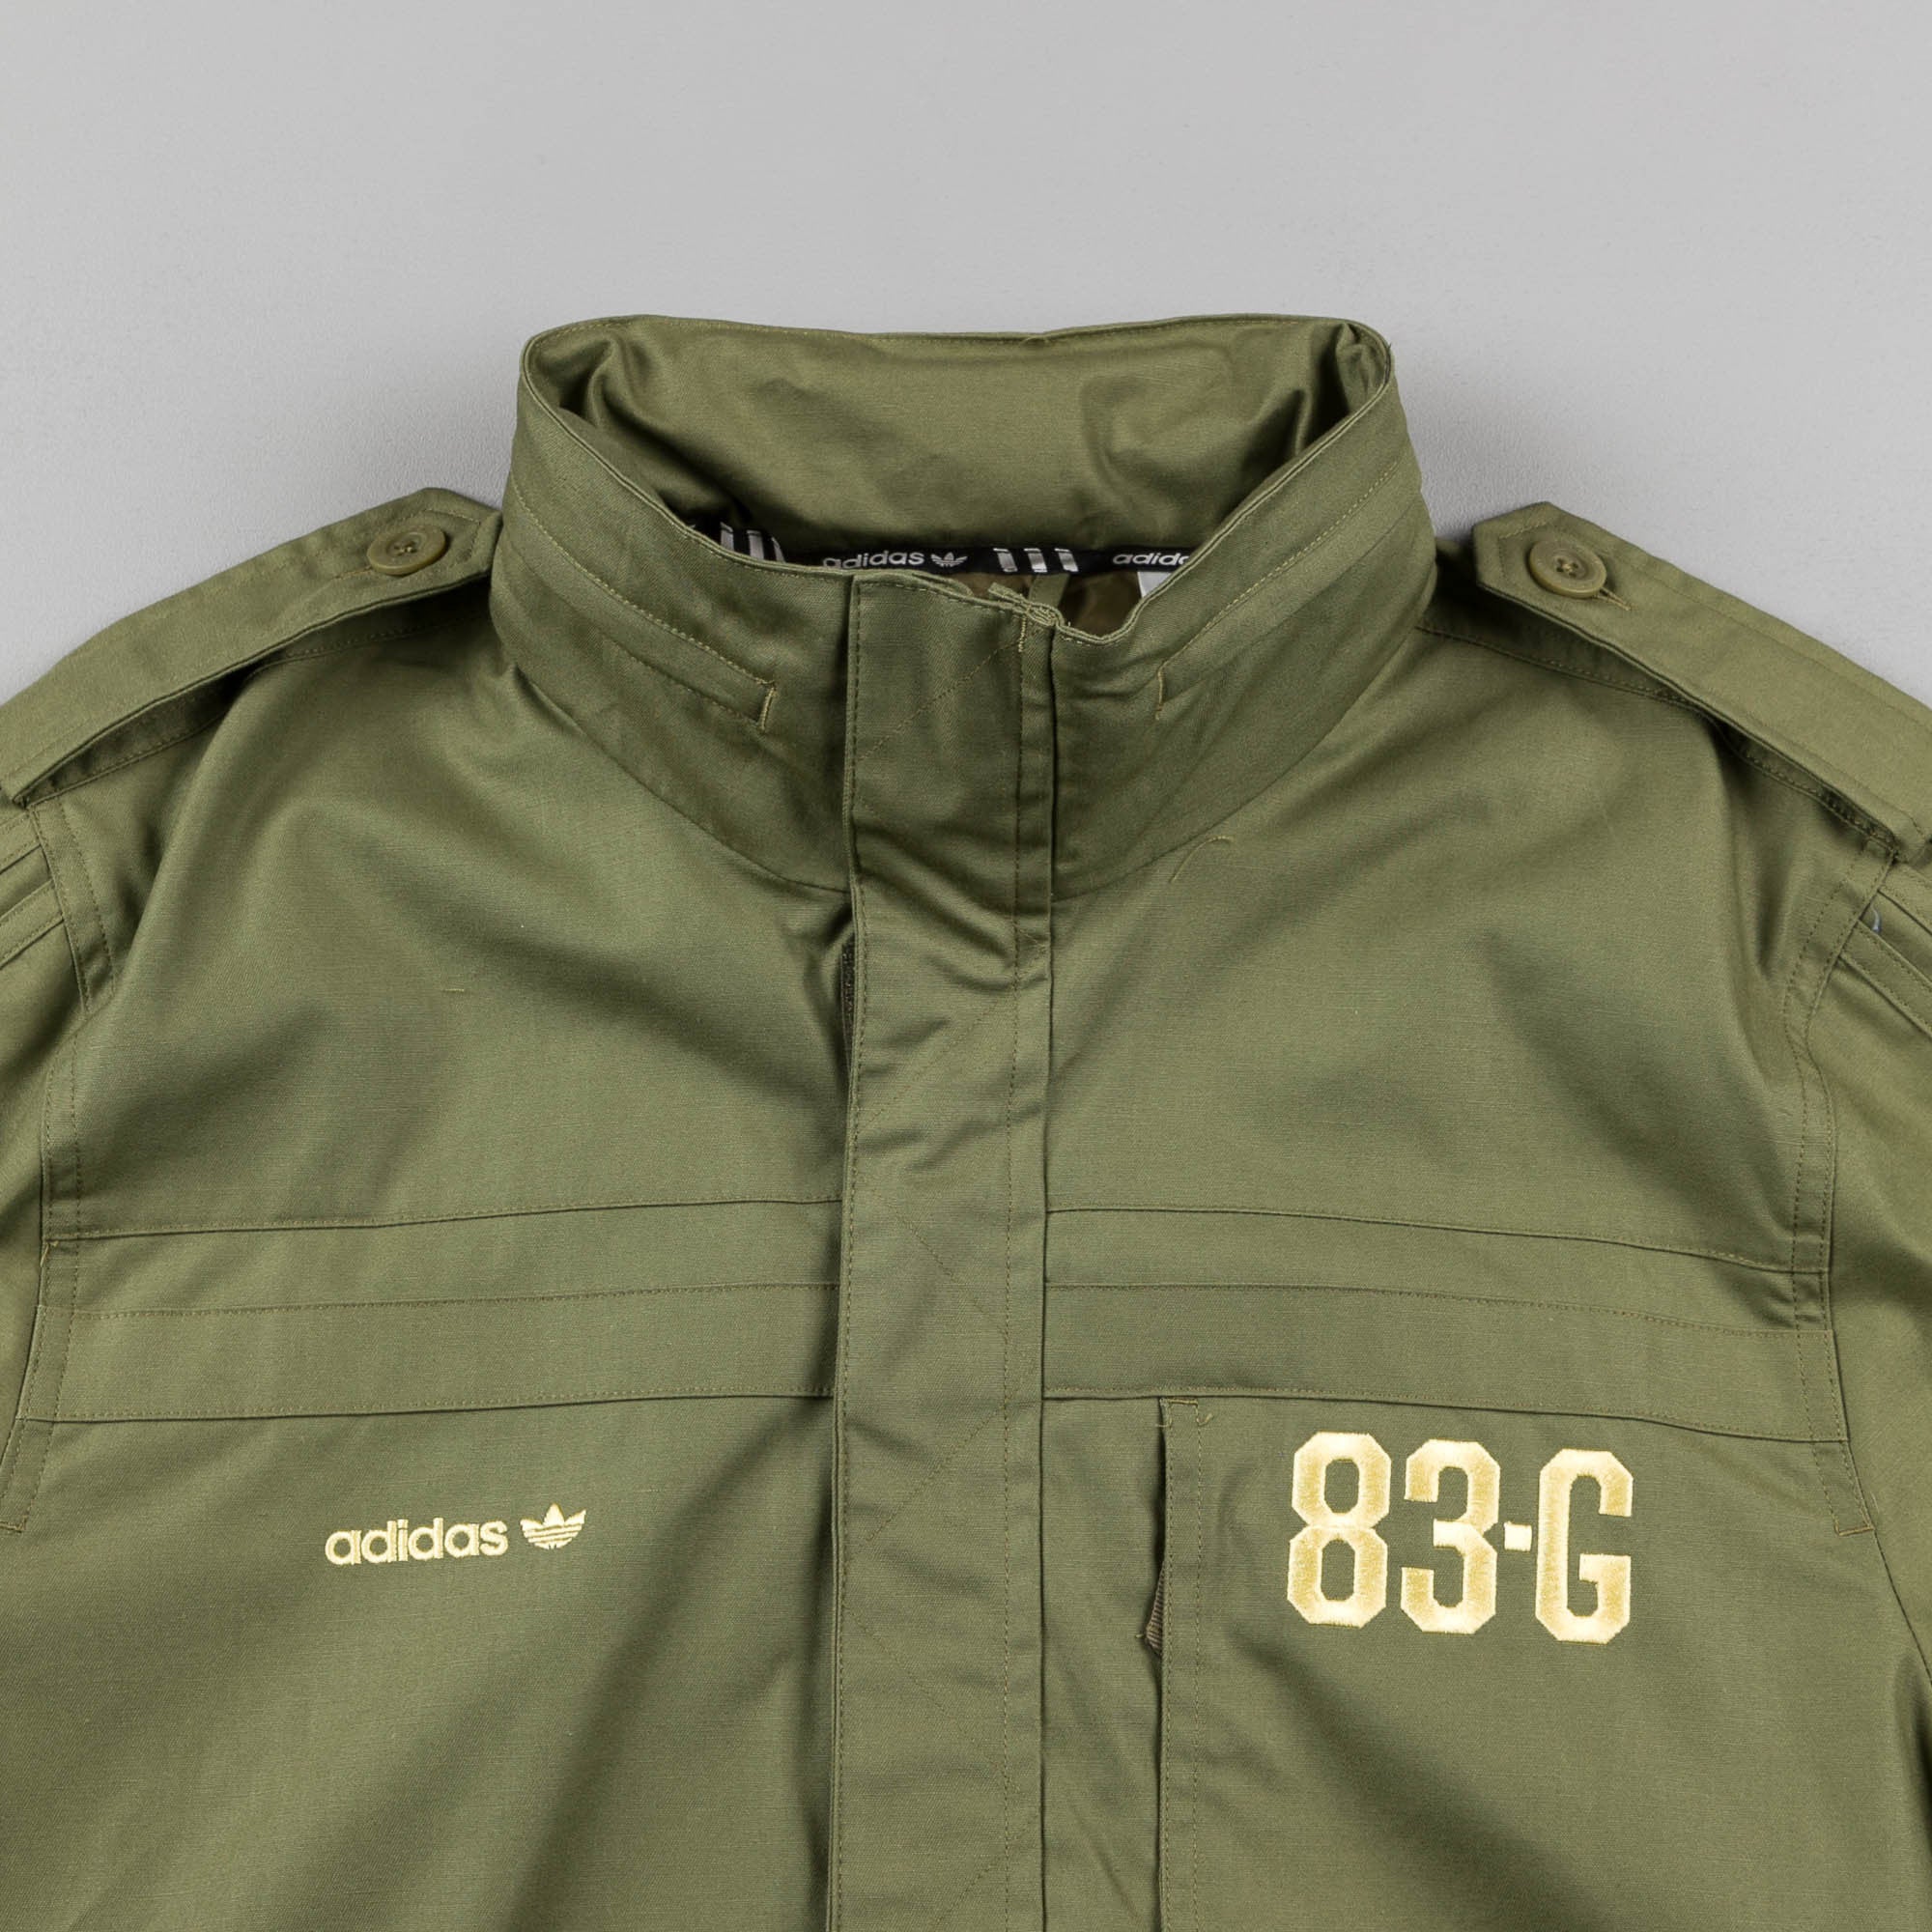 Adidas 83G Military Field Jacket 